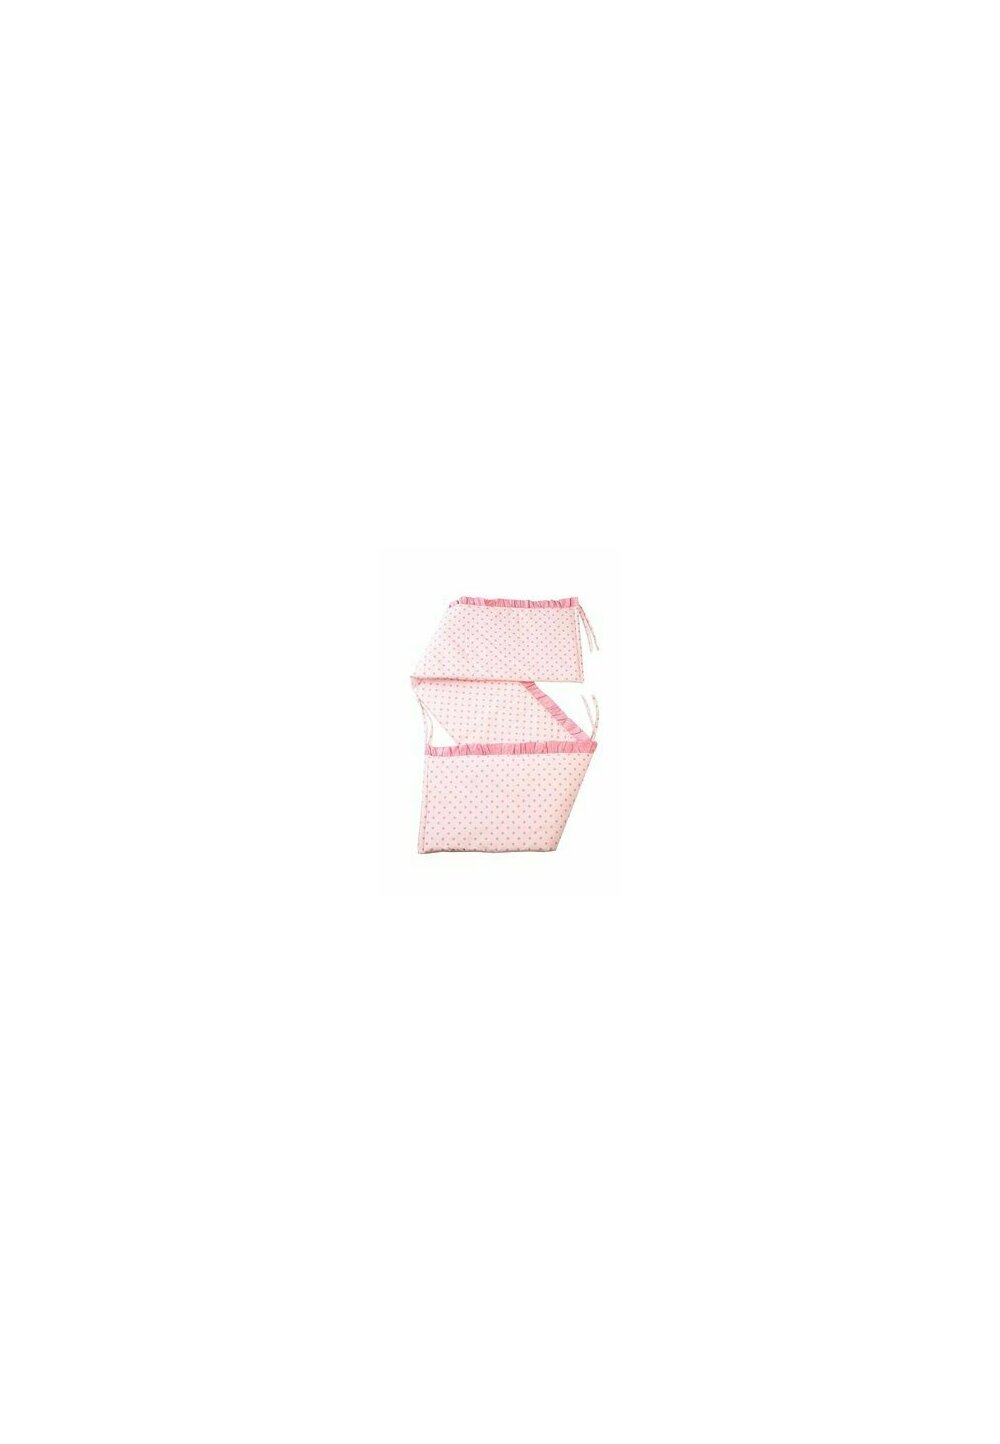 Aparatoare laterala, roz cu stelute, 180 x 30 cm Prichindel